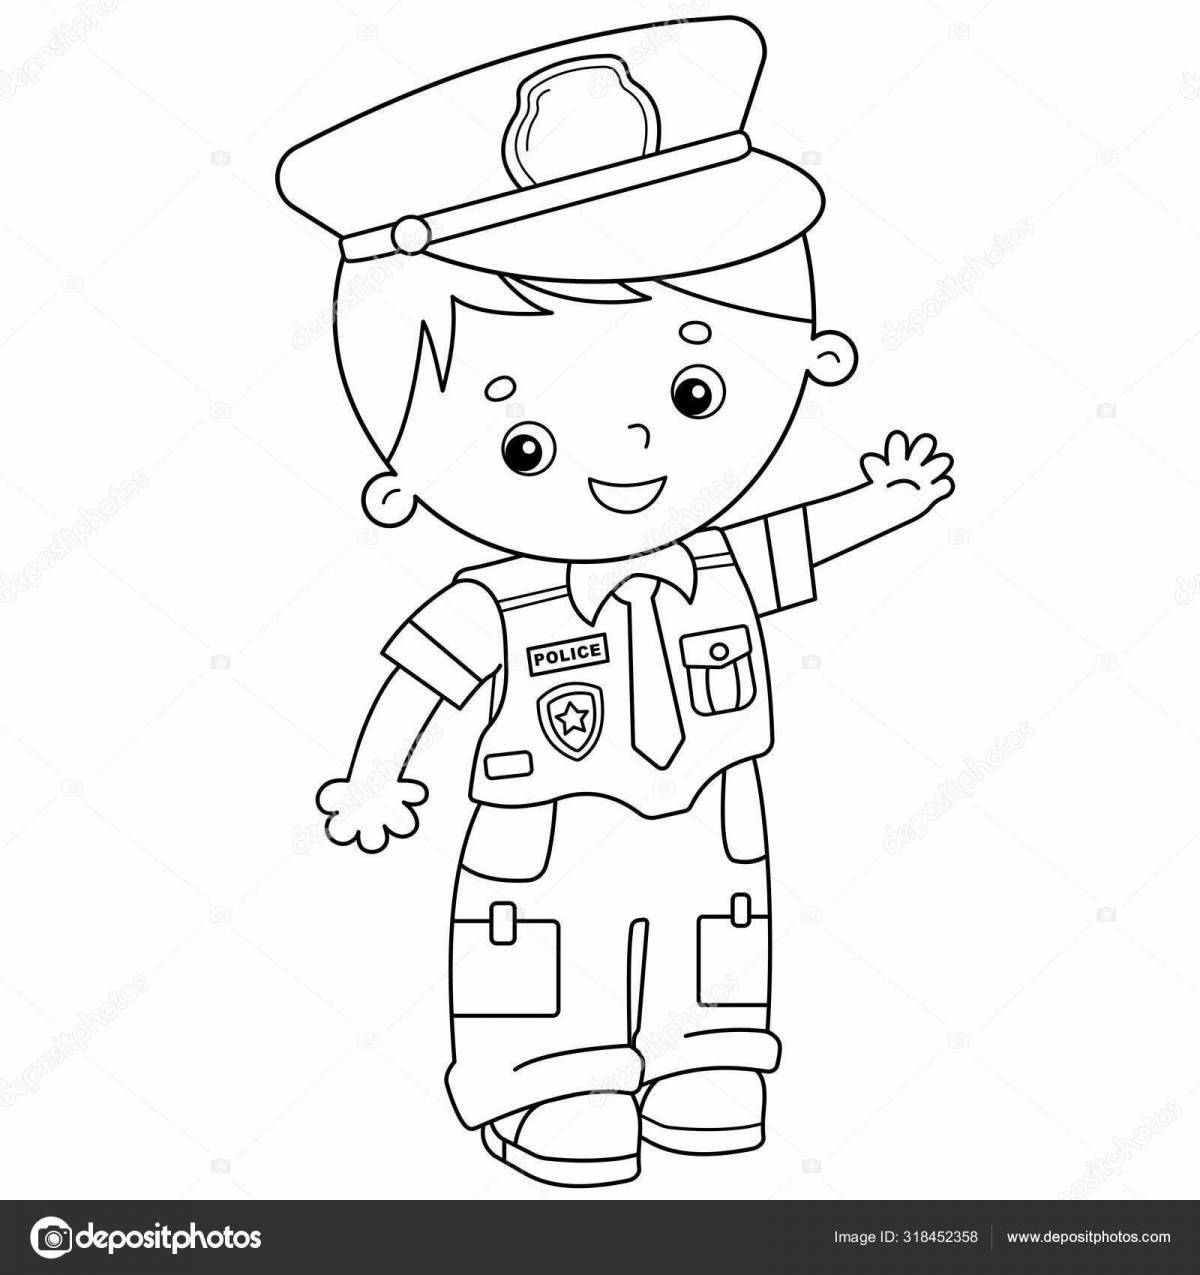 Police child #25